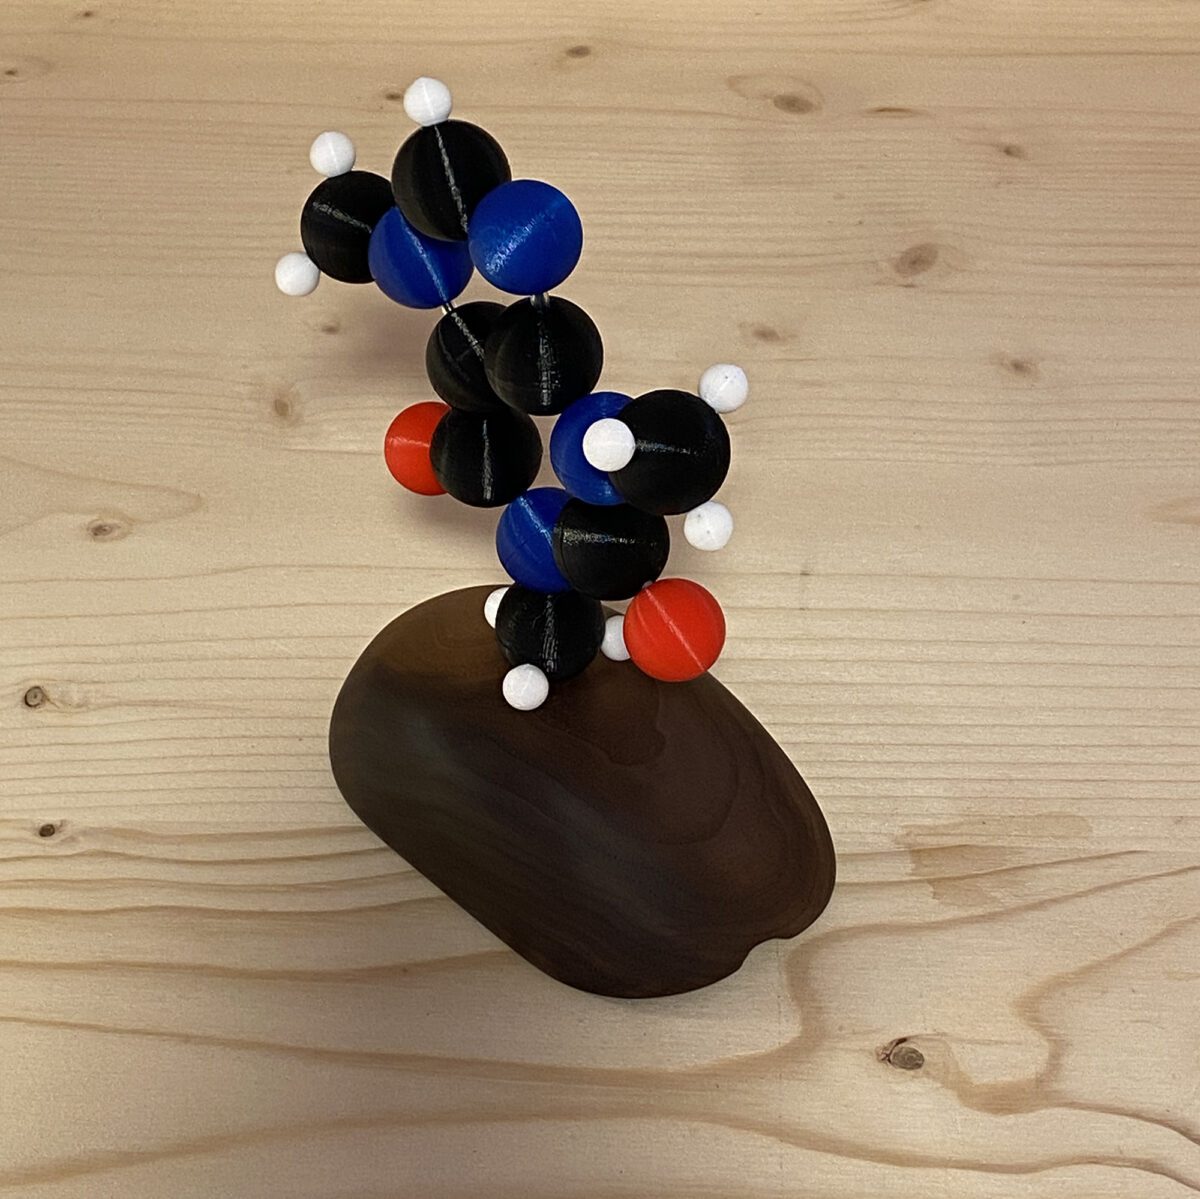 3D Printed Molecule Model of Caffeine